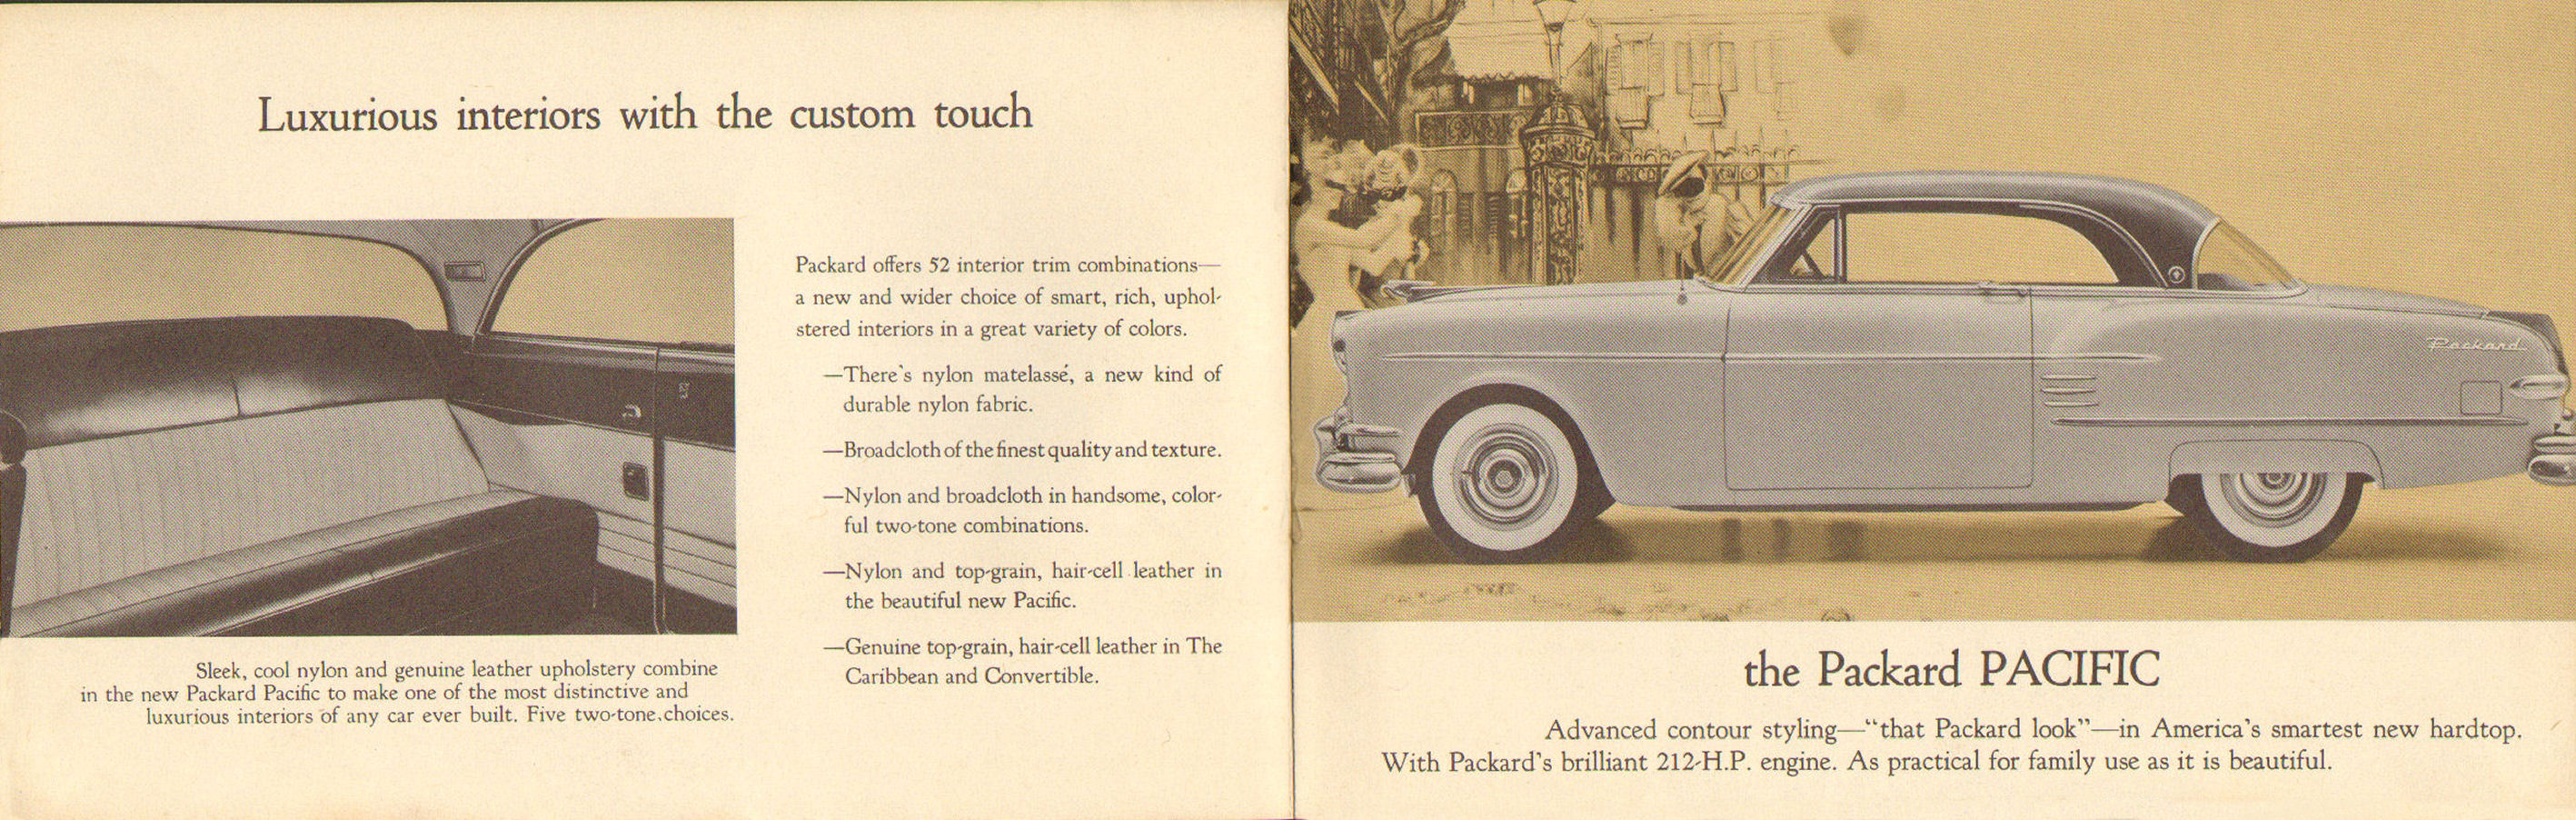 1954_Packard_Personal_Demo_Mailer-06-07